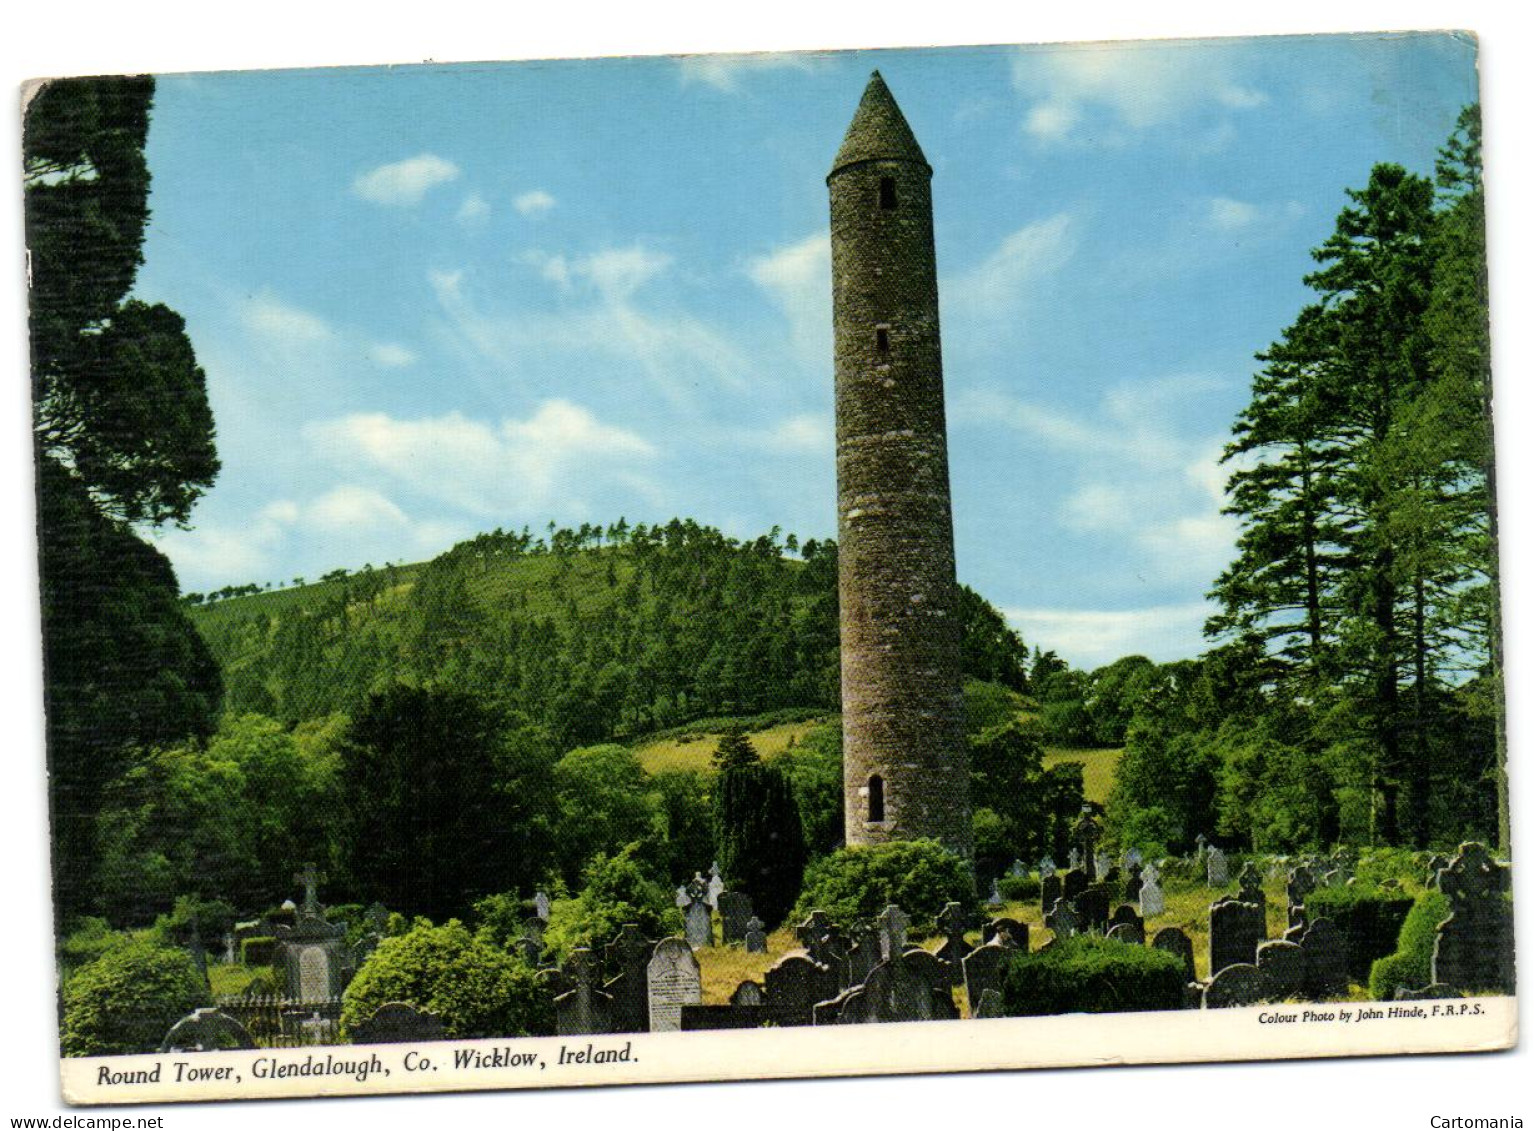 Round Tower - Glendalough Co. Wicklow - Ireland - Wicklow